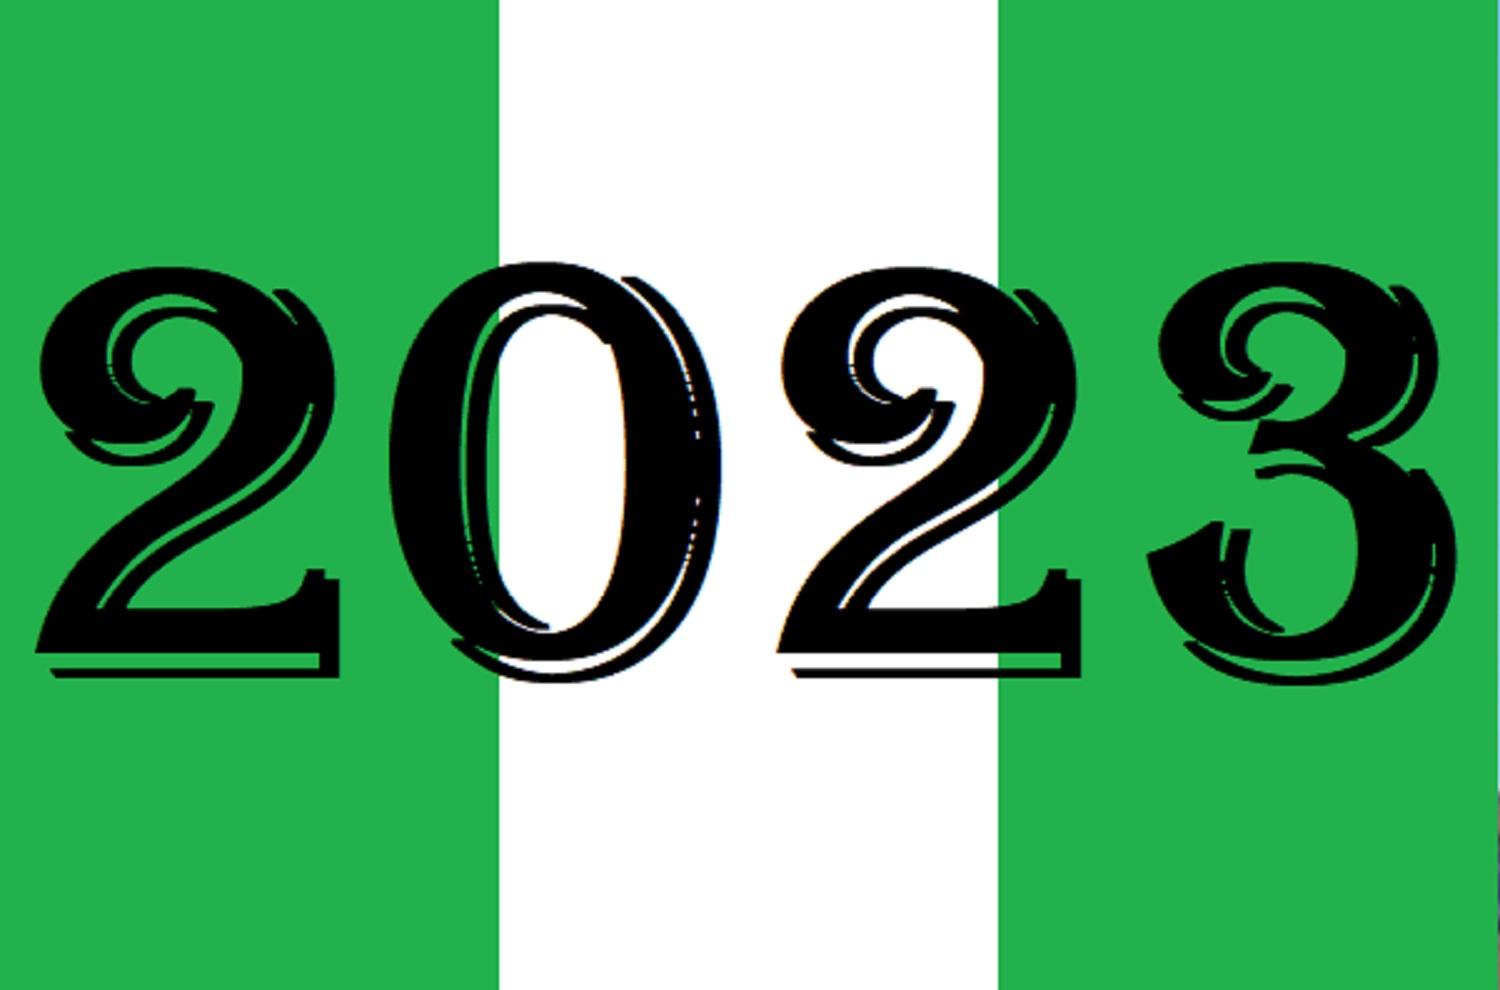 2023 Who will go for the Igbo, Igbo-Presidency